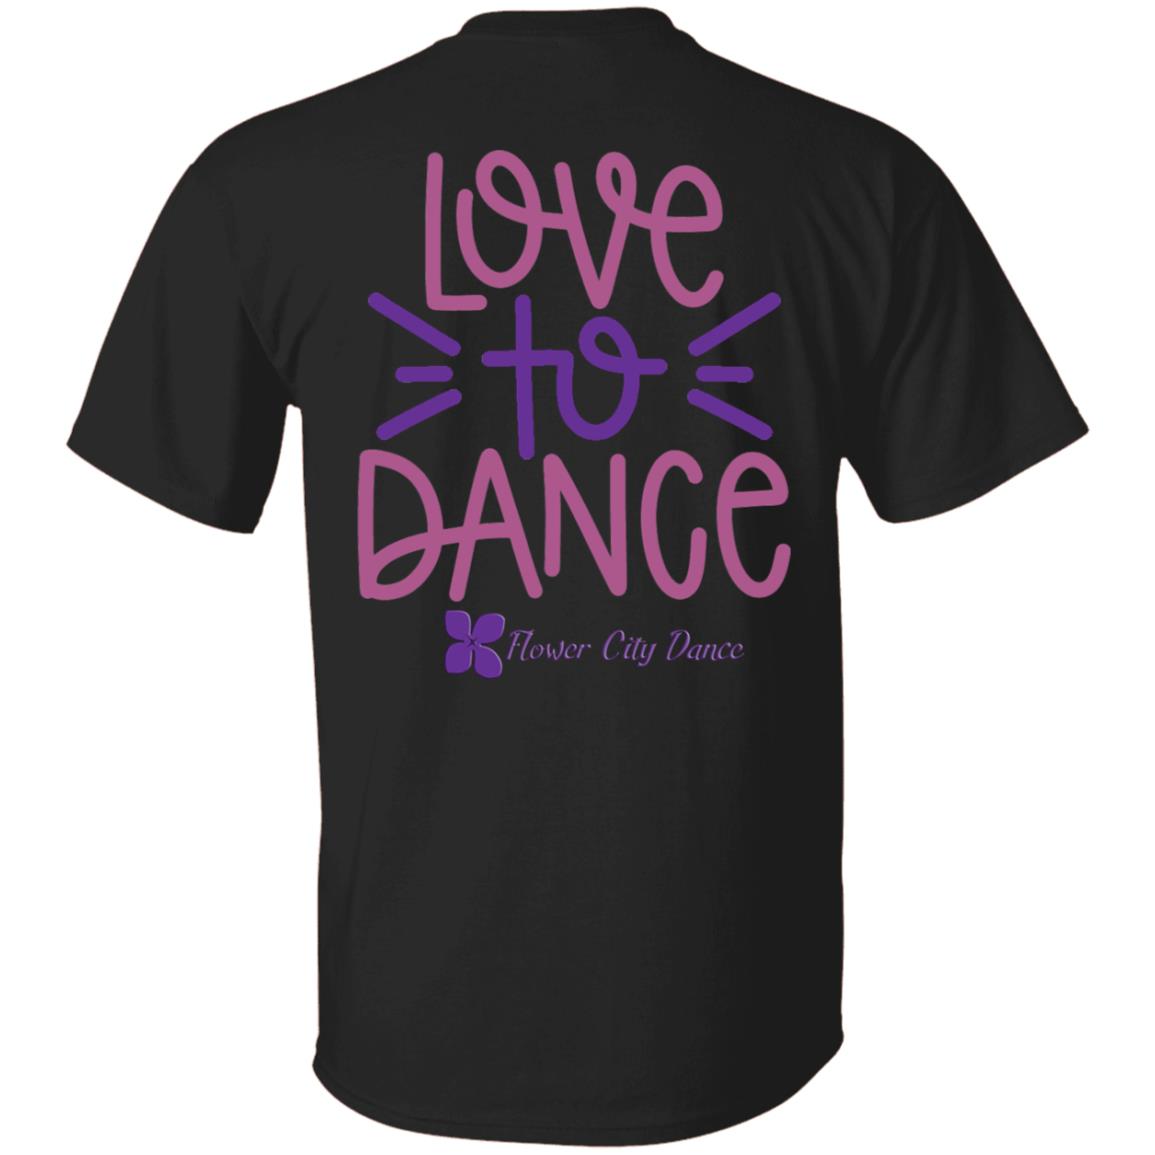 FCD Love To Dance SVG Cut File 100% Cotton T-Shirt